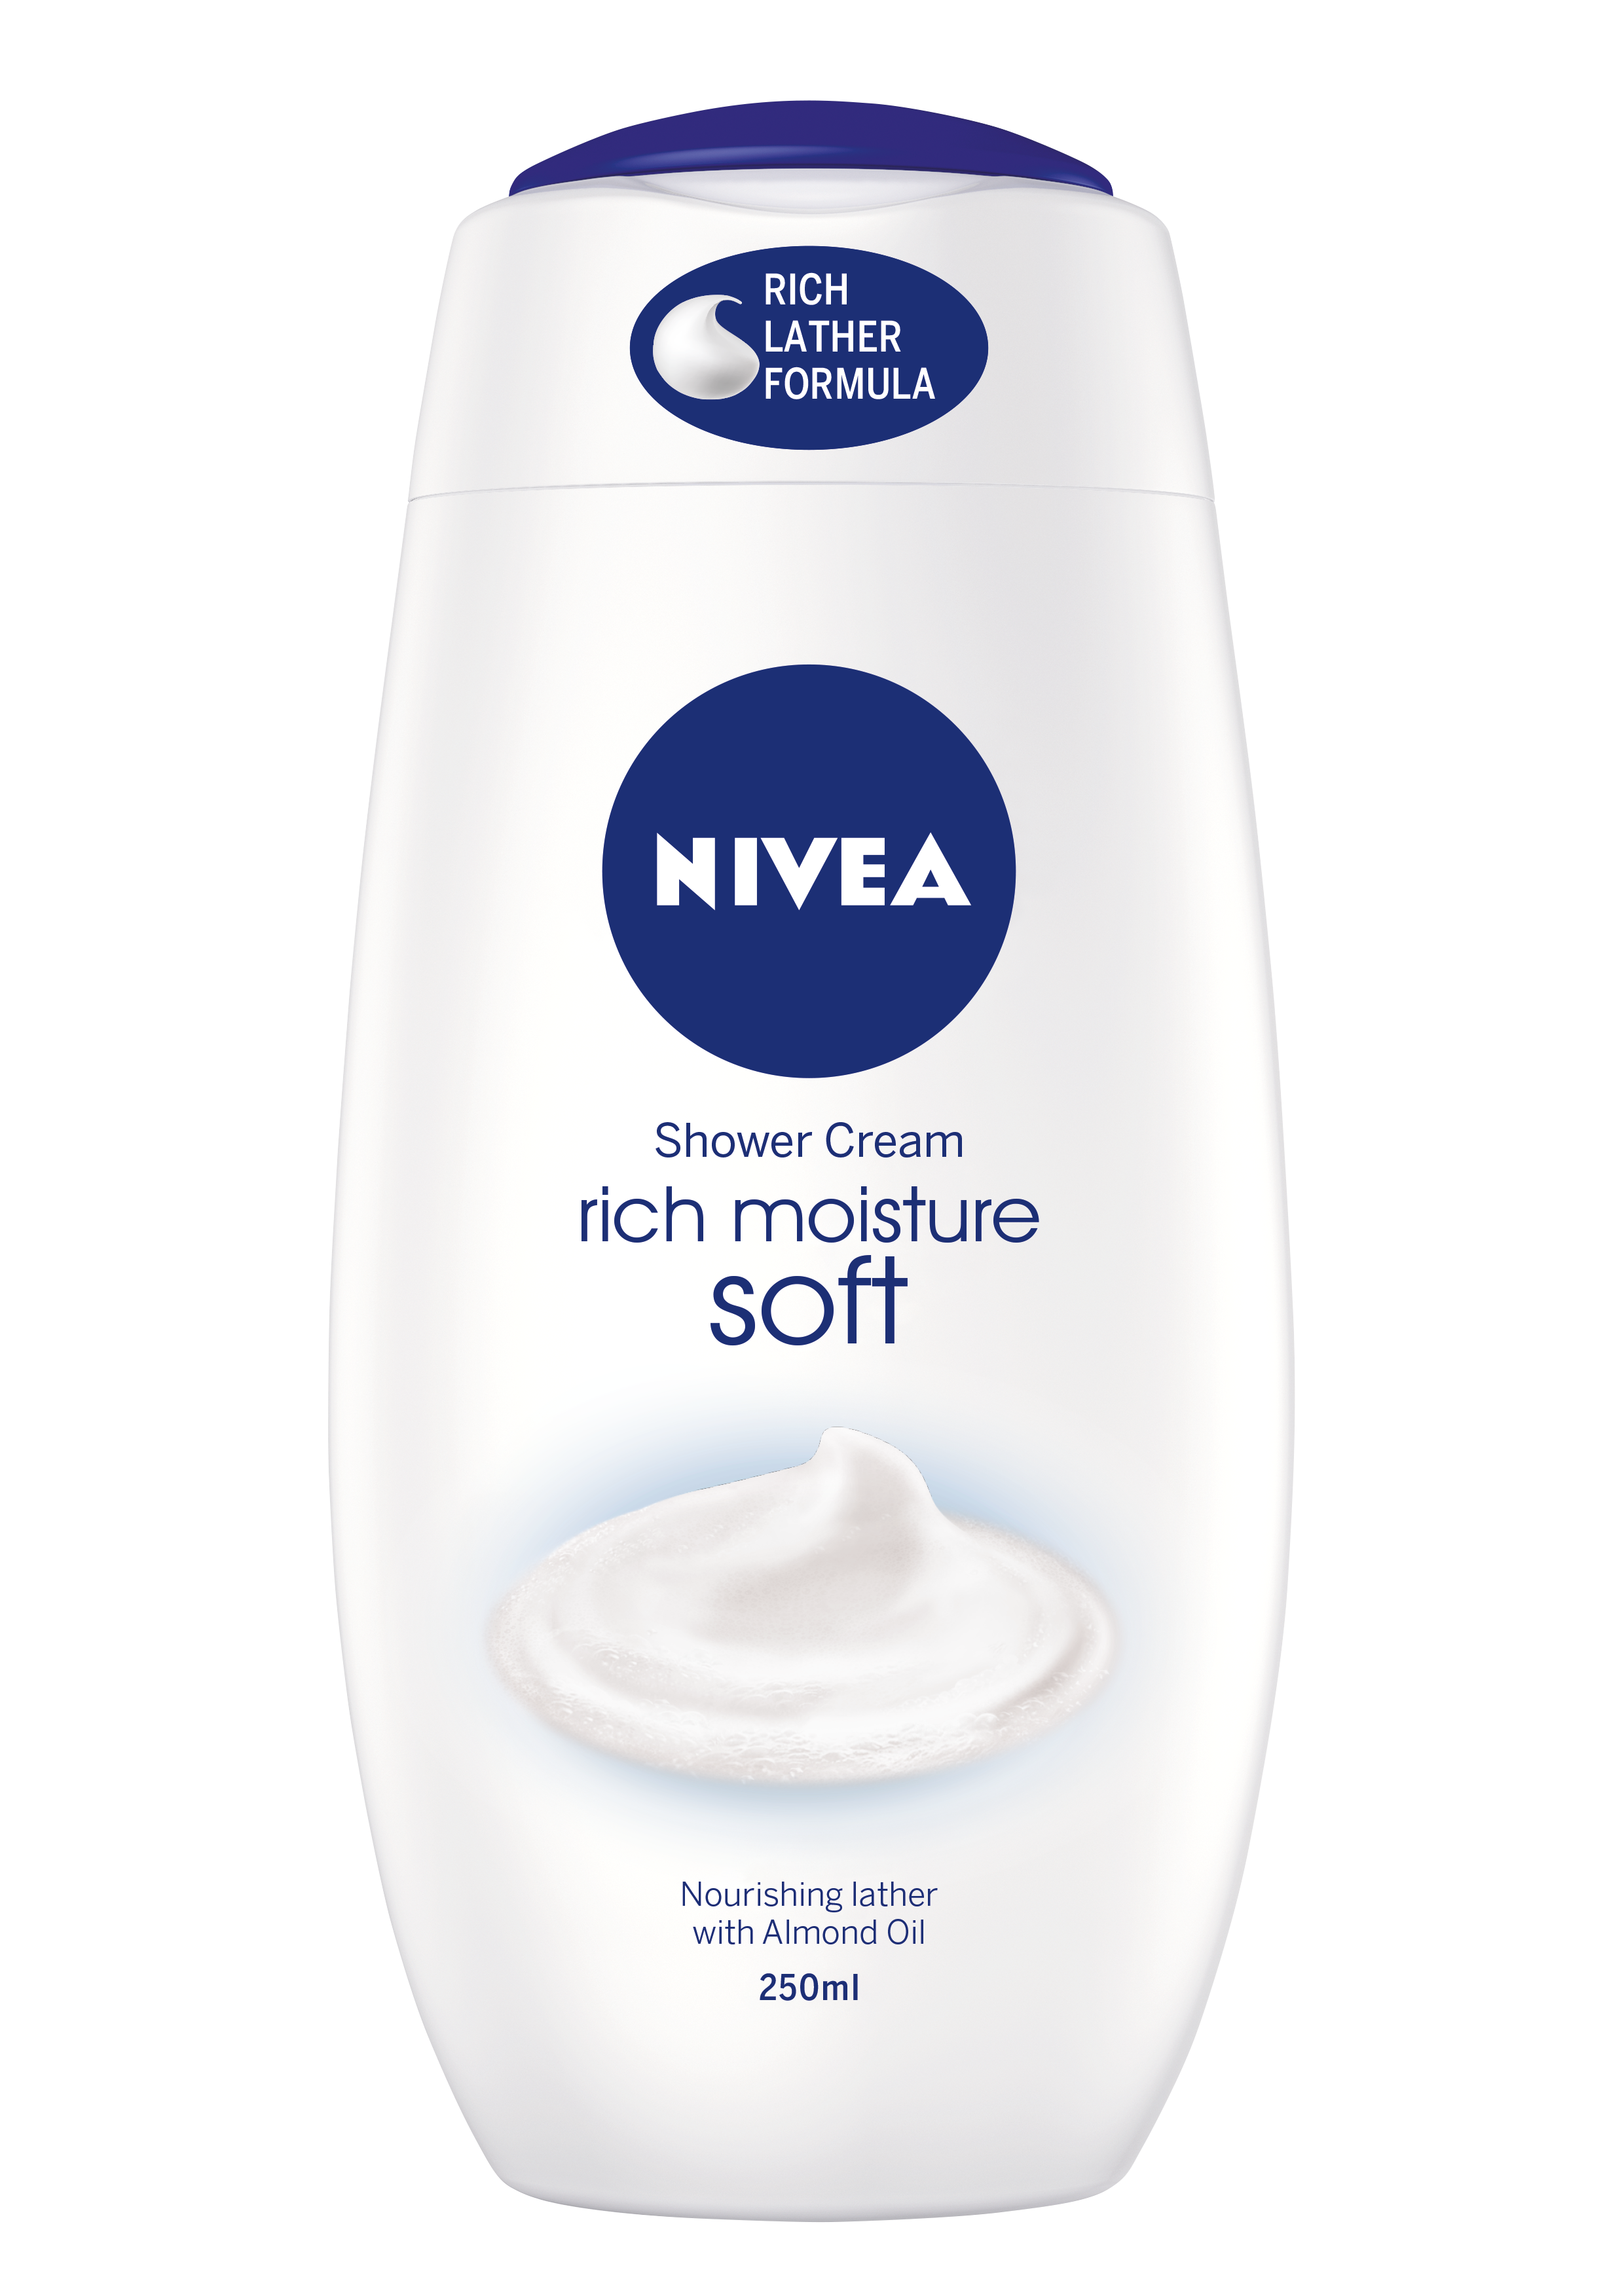 NIVEA Rich Moisture Soft Shower Cream | NIVEA